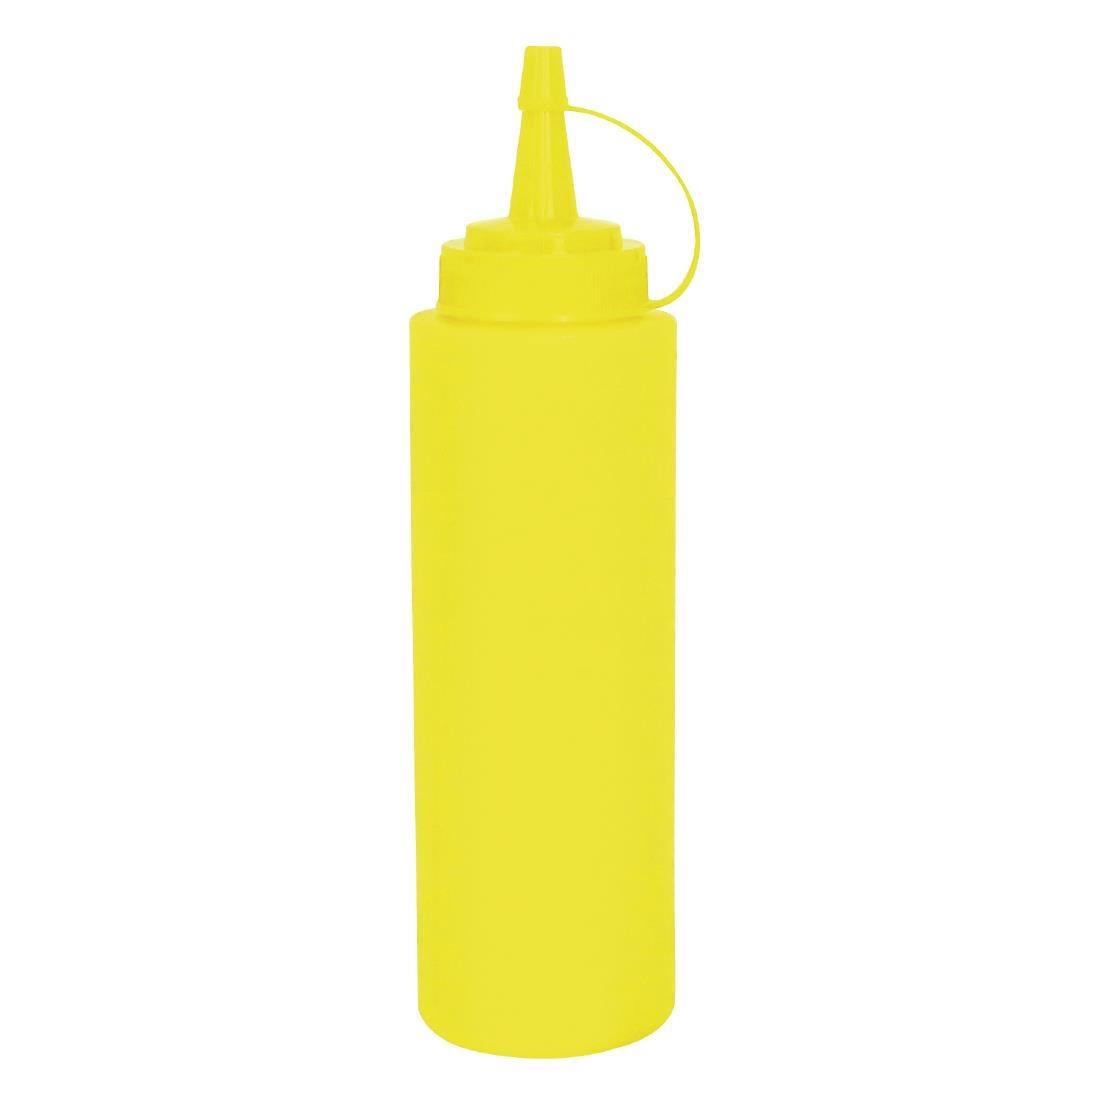 Vogue Yellow Squeeze Sauce Bottle 35oz - W834  - 1